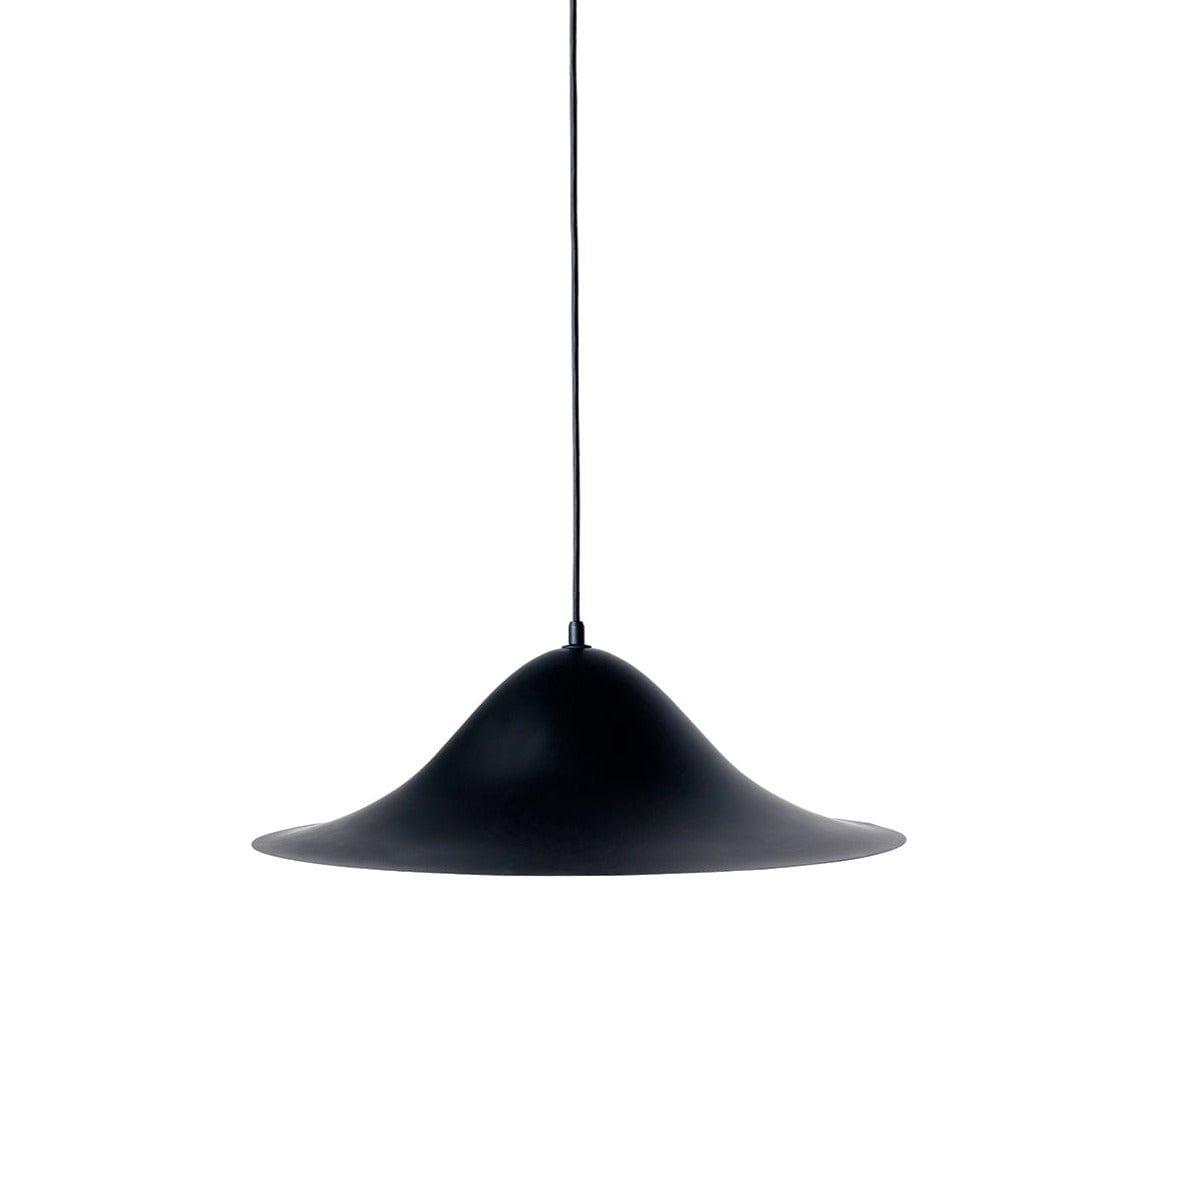 Lampa wisząca HANS czarny Pholc 35 cm   Eye on Design